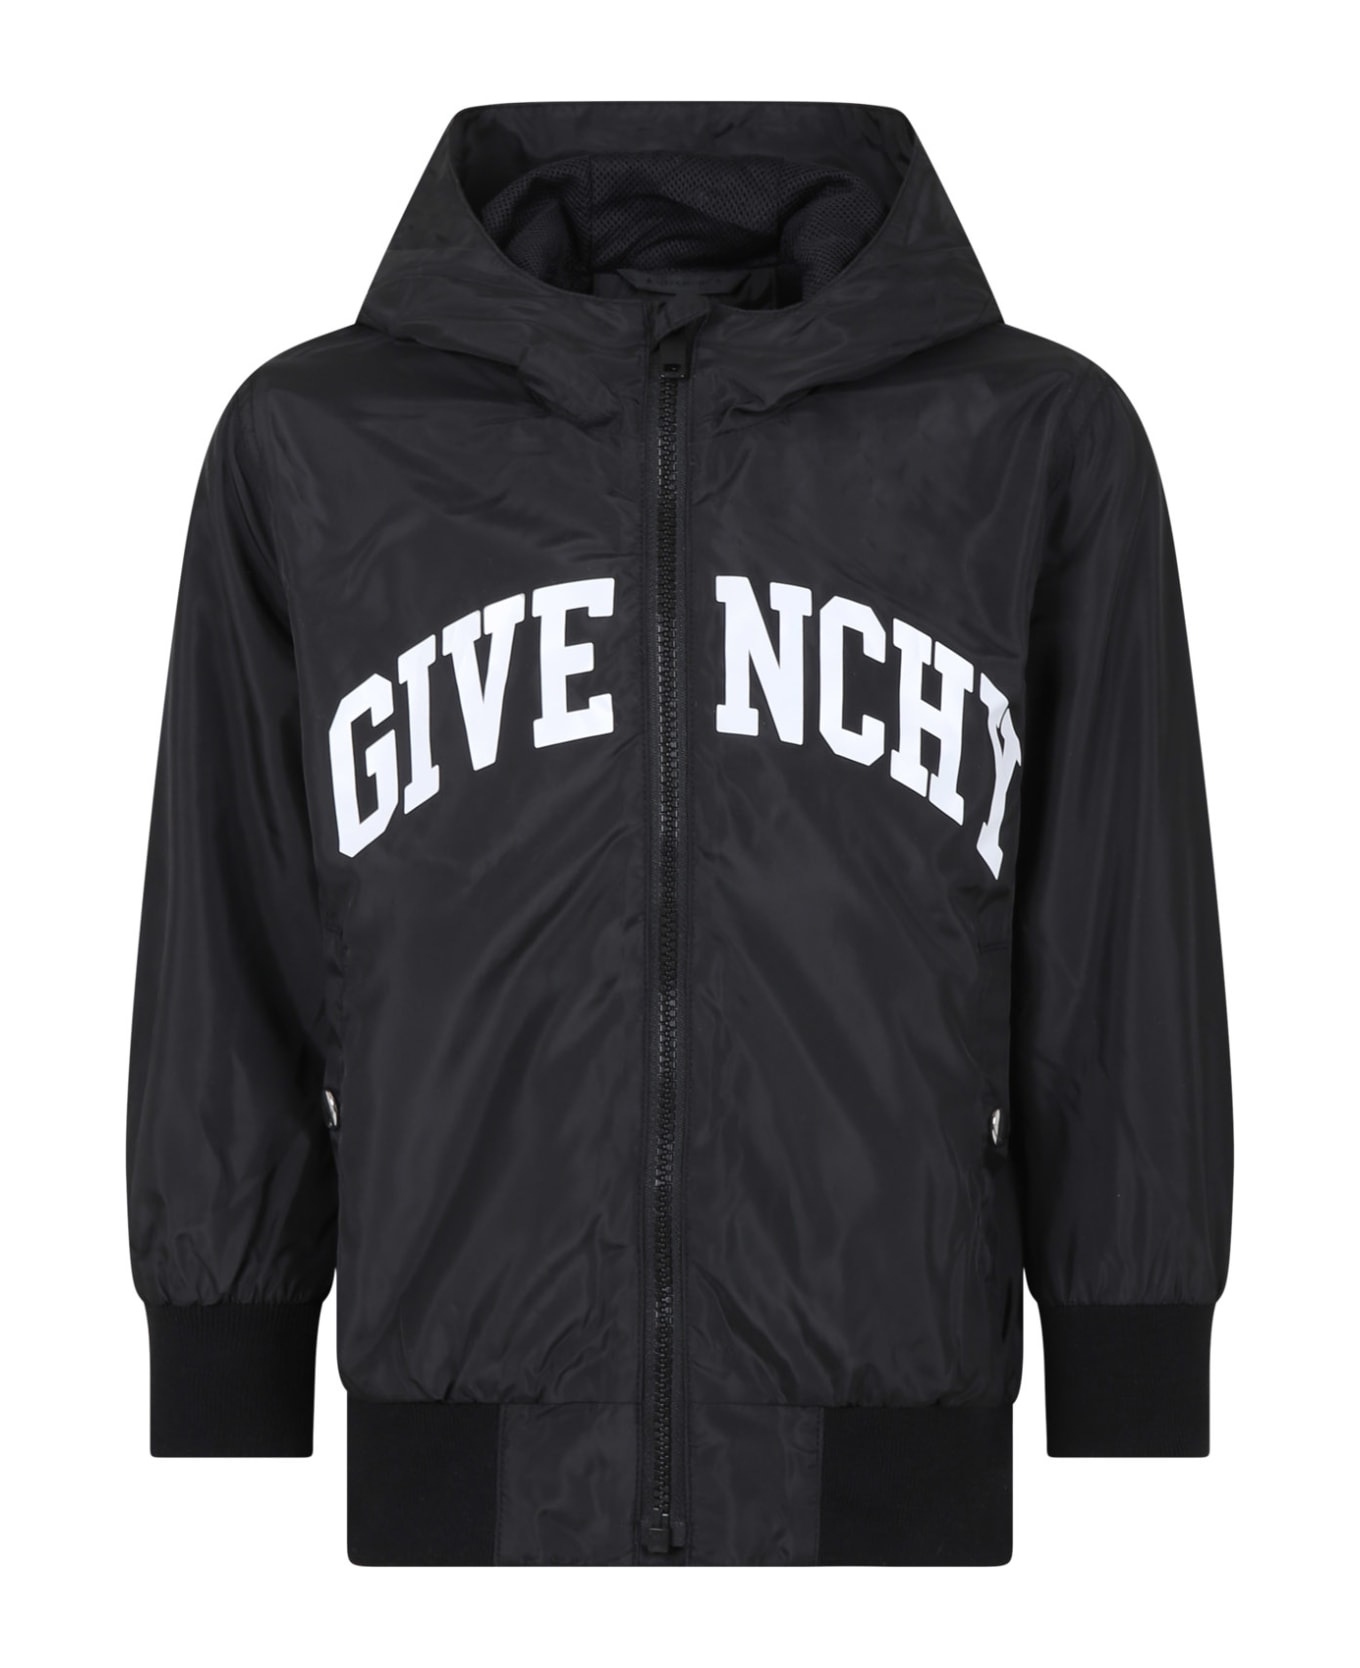 Givenchy Black Windbreaker For Boy With Logo - Nero